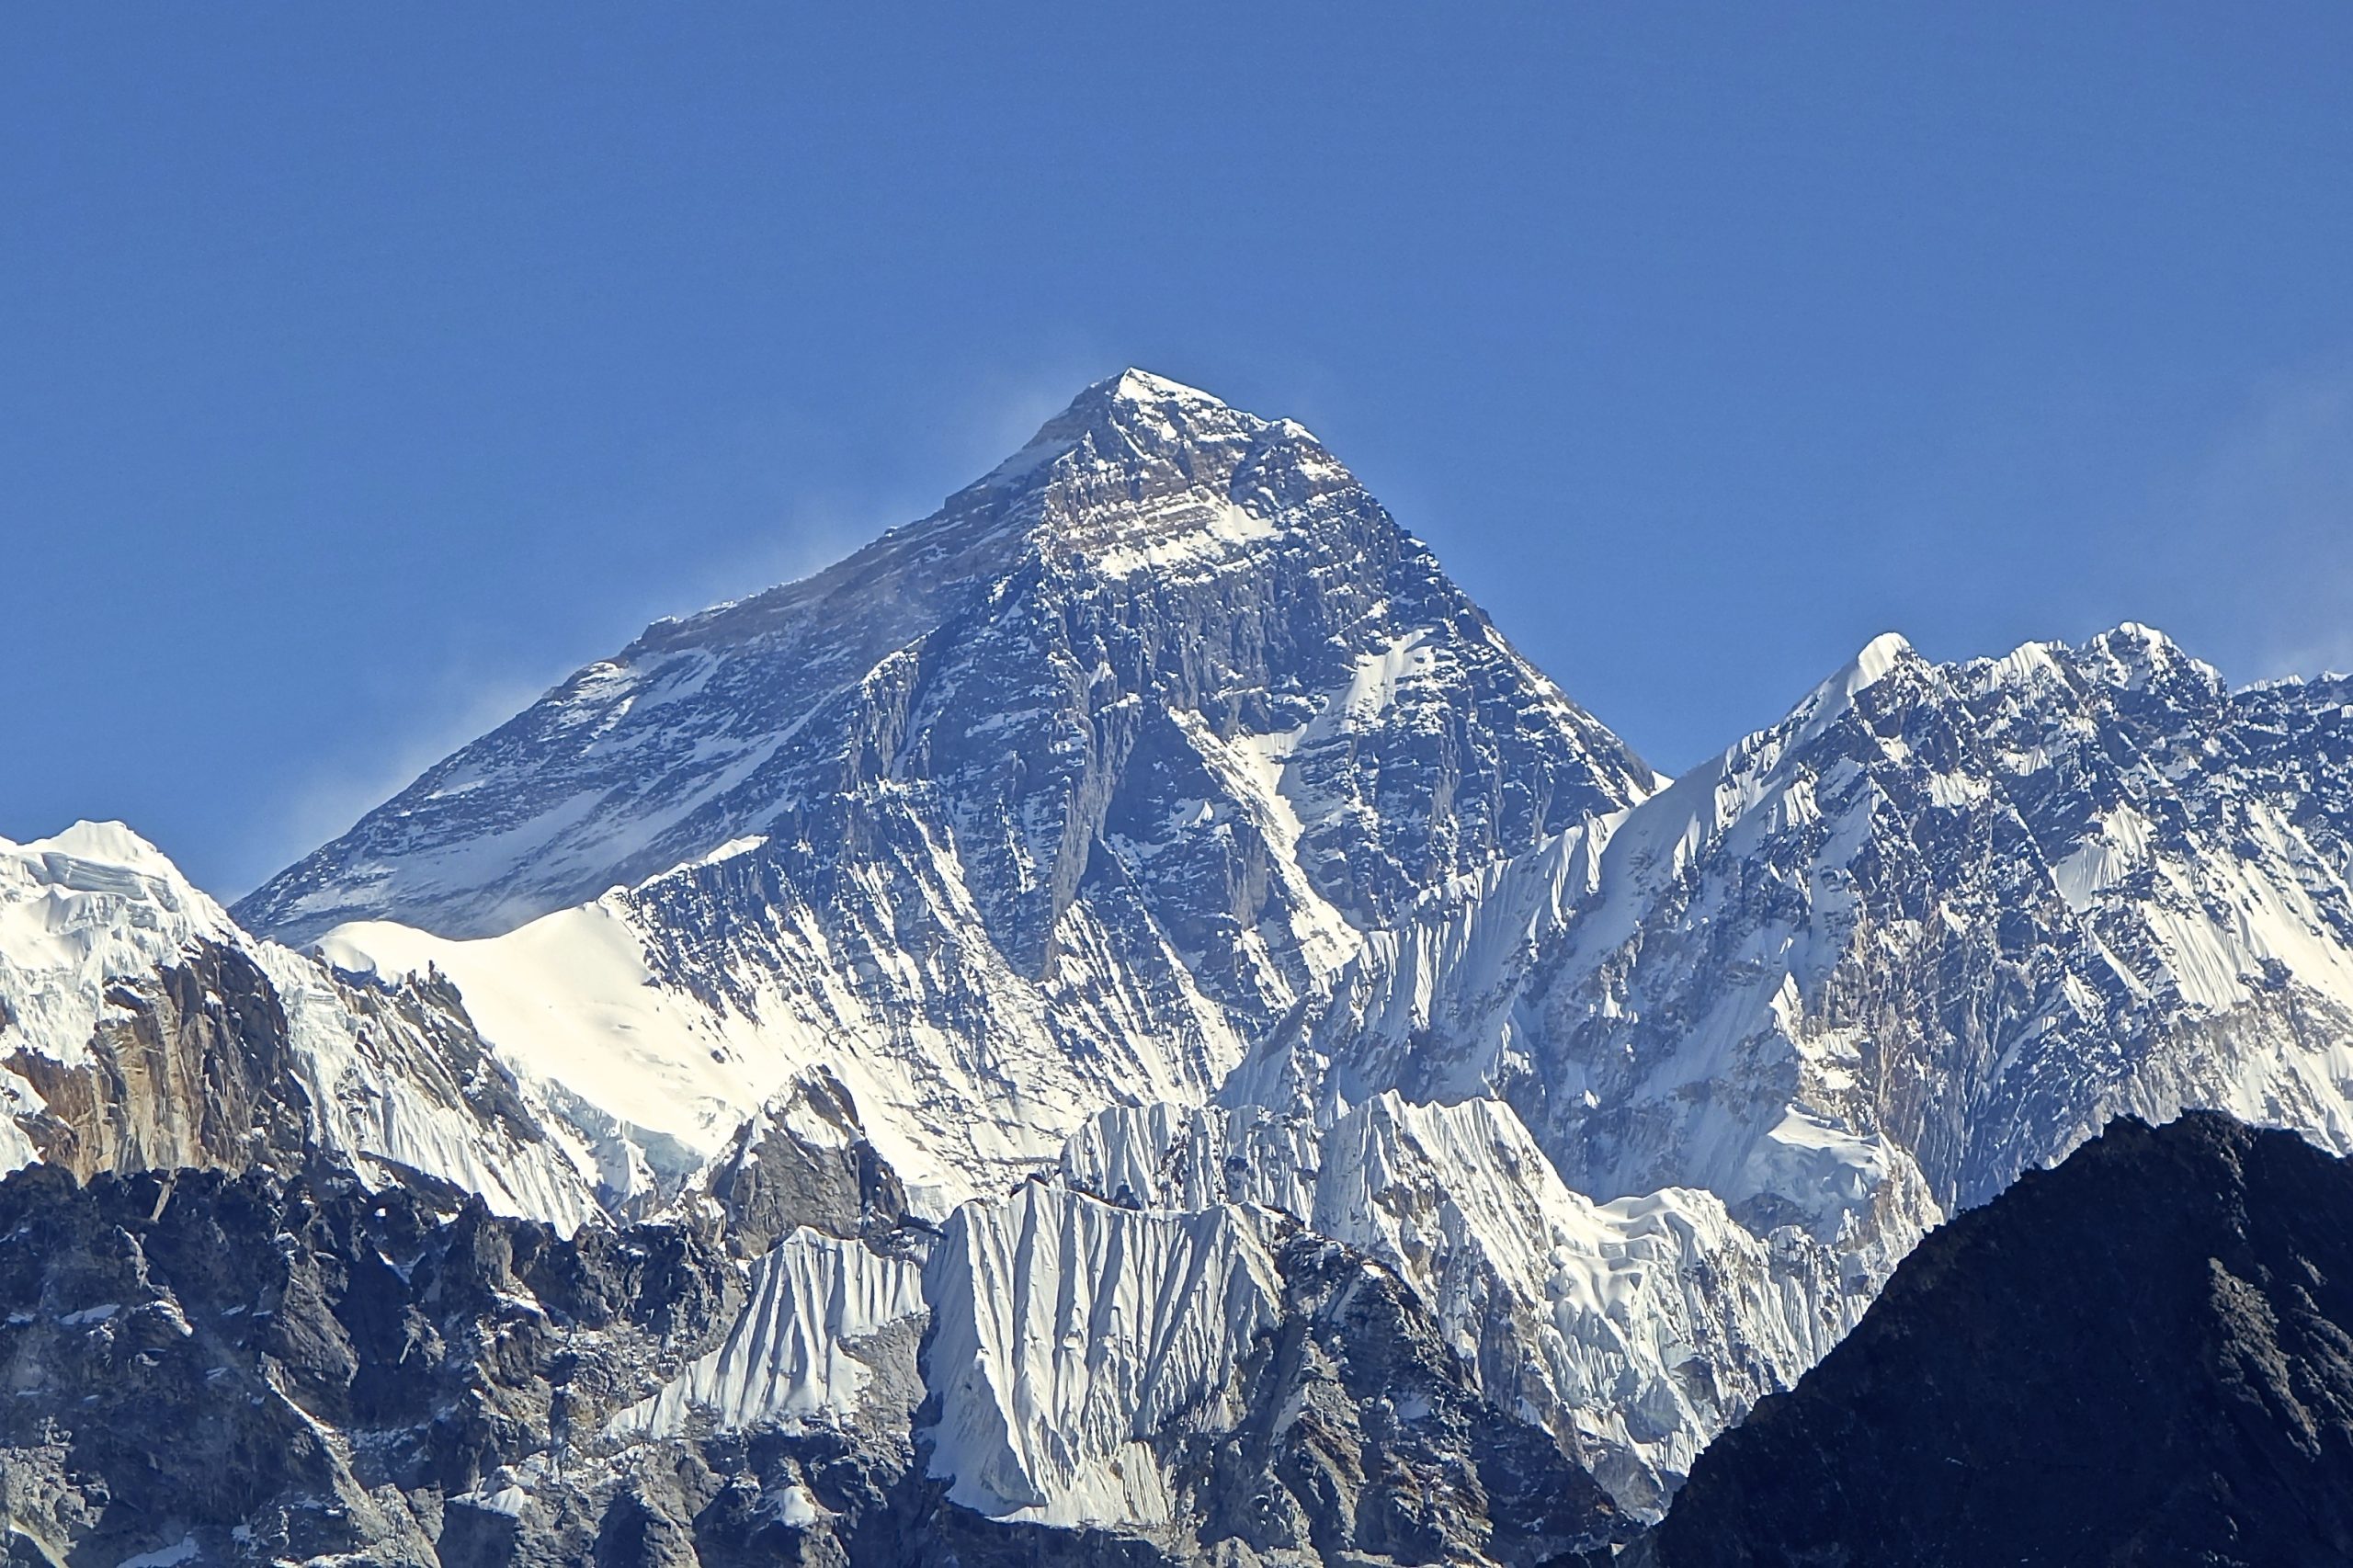 Sagarmatha National Park: Home to the Highest Peak Mt Everest